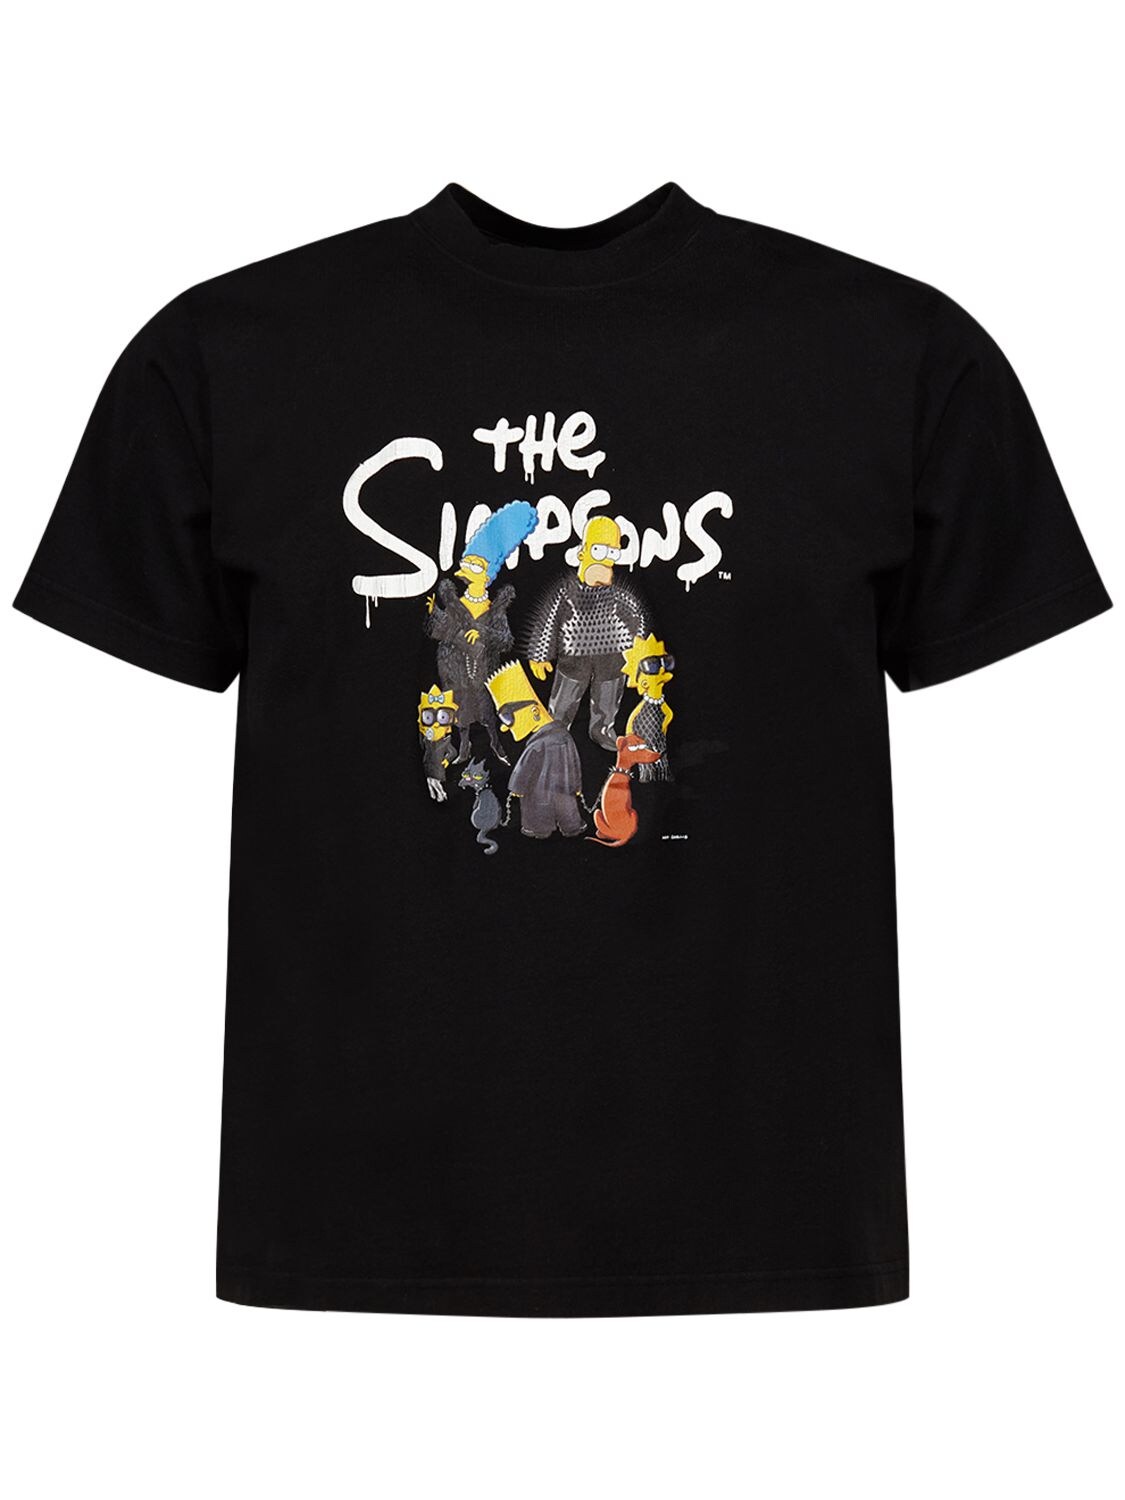 The Simpsons Tm Cotton T-shirt – WOMEN > CLOTHING > T-SHIRTS